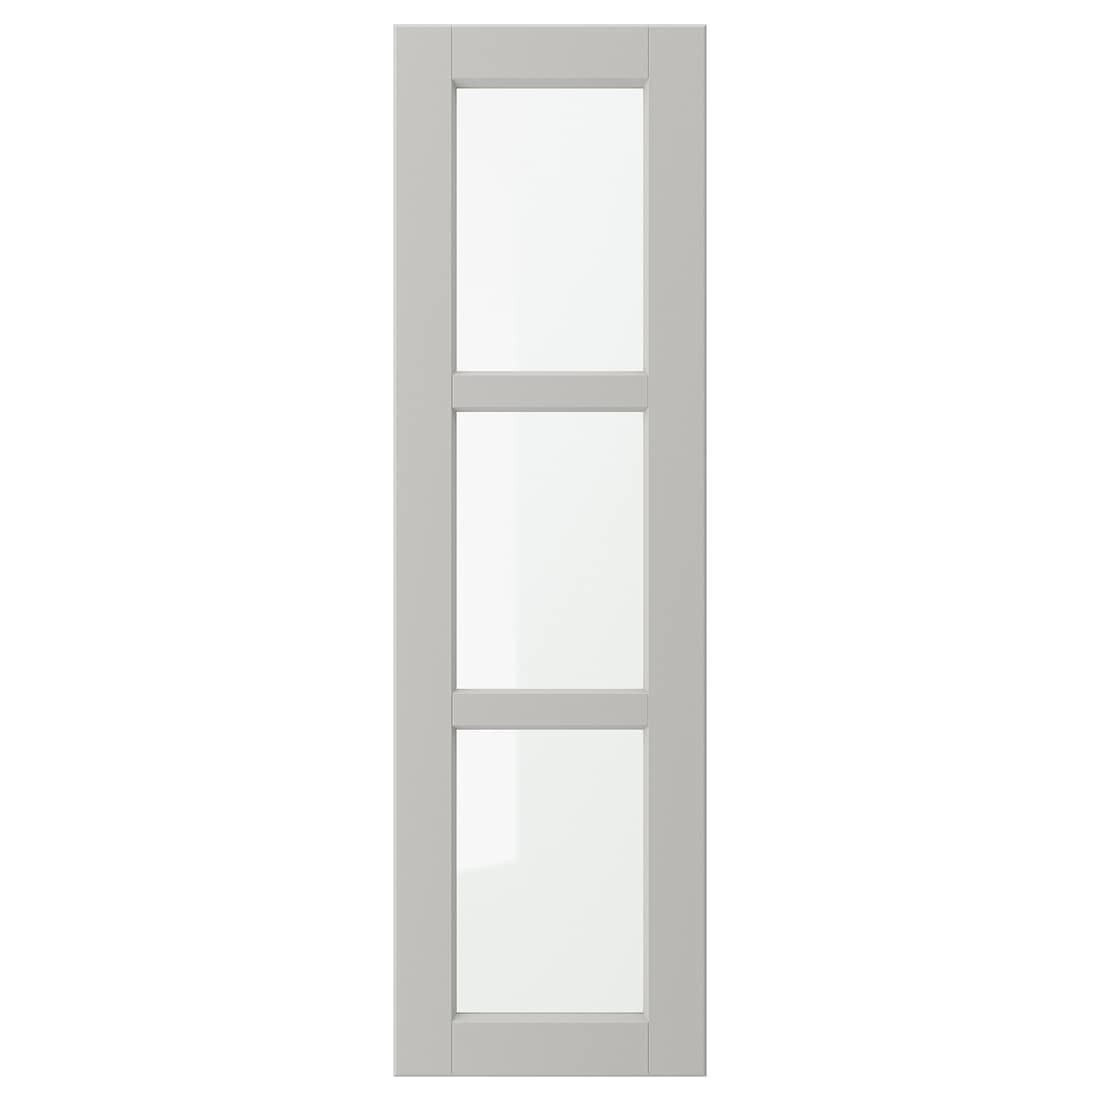 IKEA LERHYTTAN ЛЕРХЮТТАН Стеклянная дверь, светло-серый, 30x100 см 40461508 404.615.08